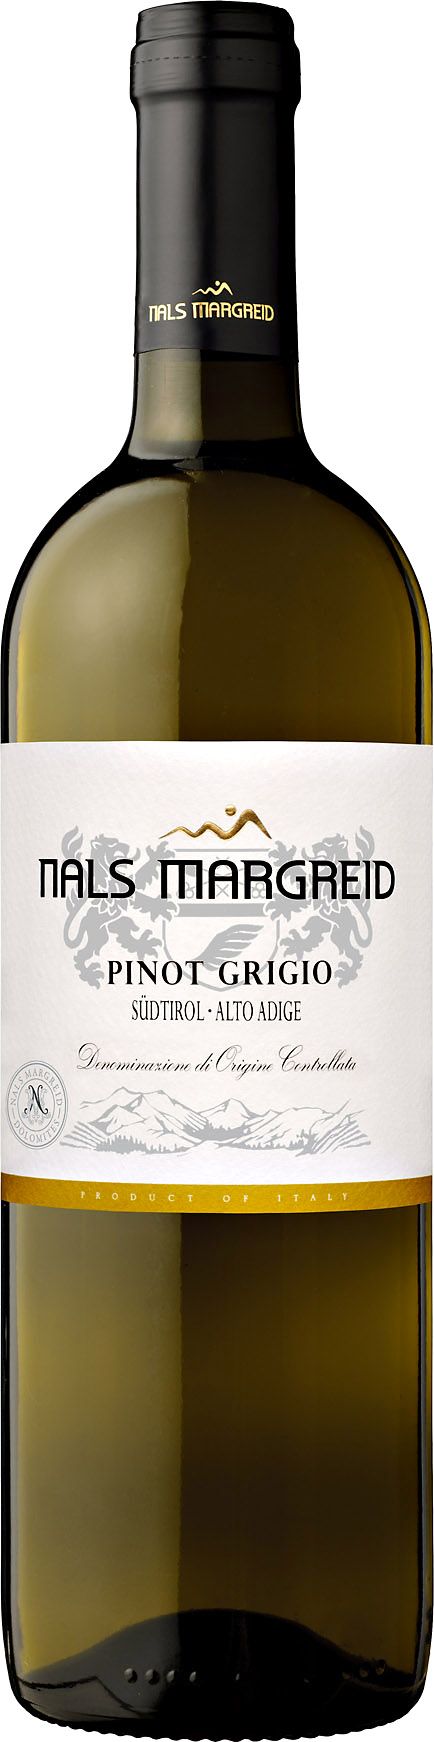 Nals Margreid, Pinot Grigio, 2014